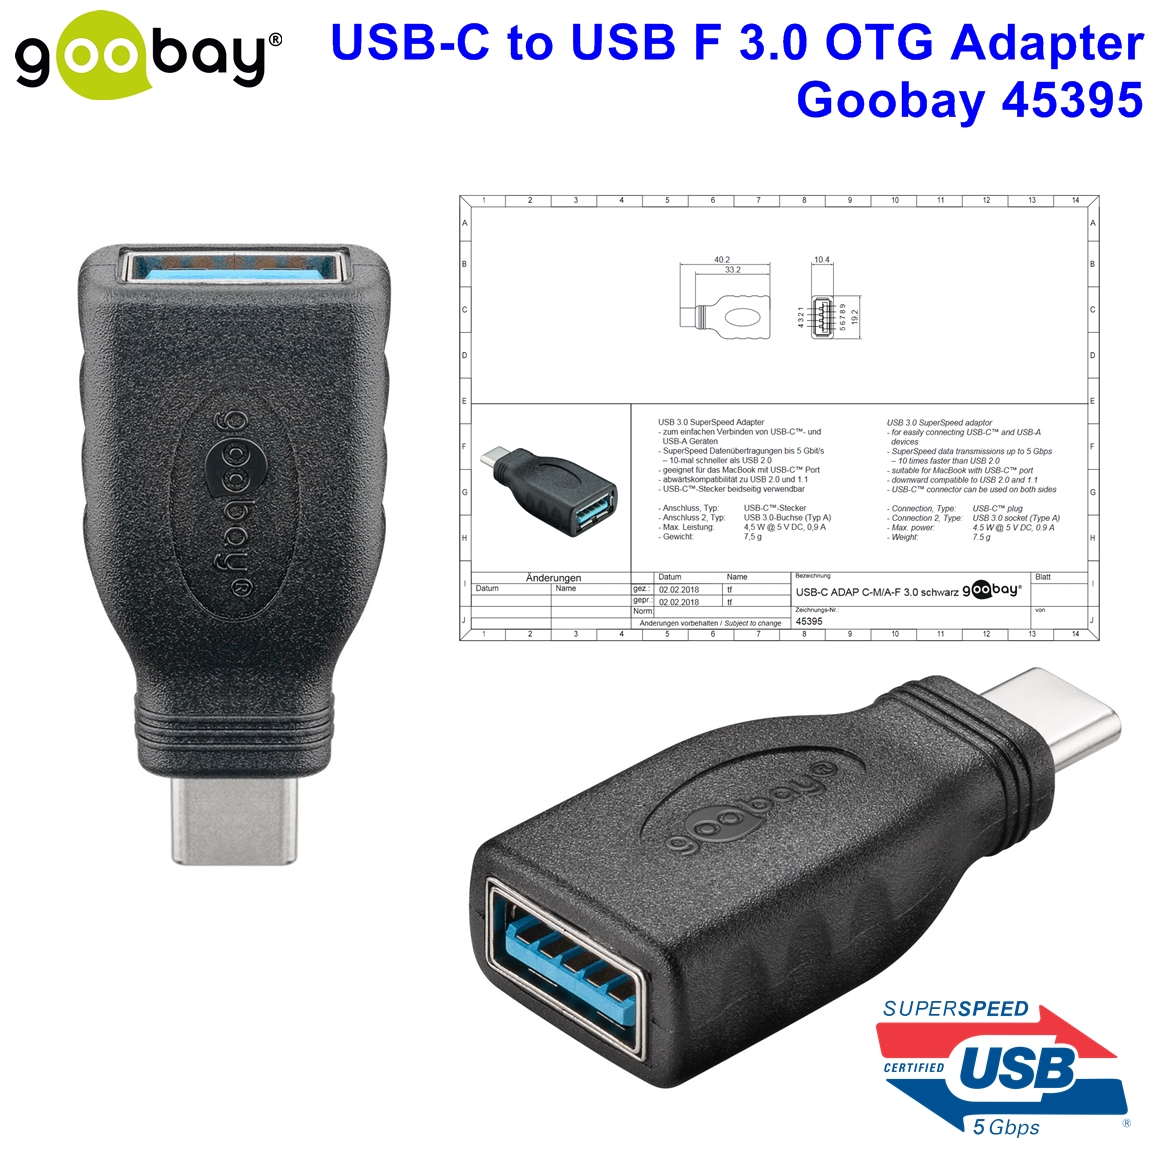 USB-C to USB F 3.0 OTG Adapter Goobay 45395